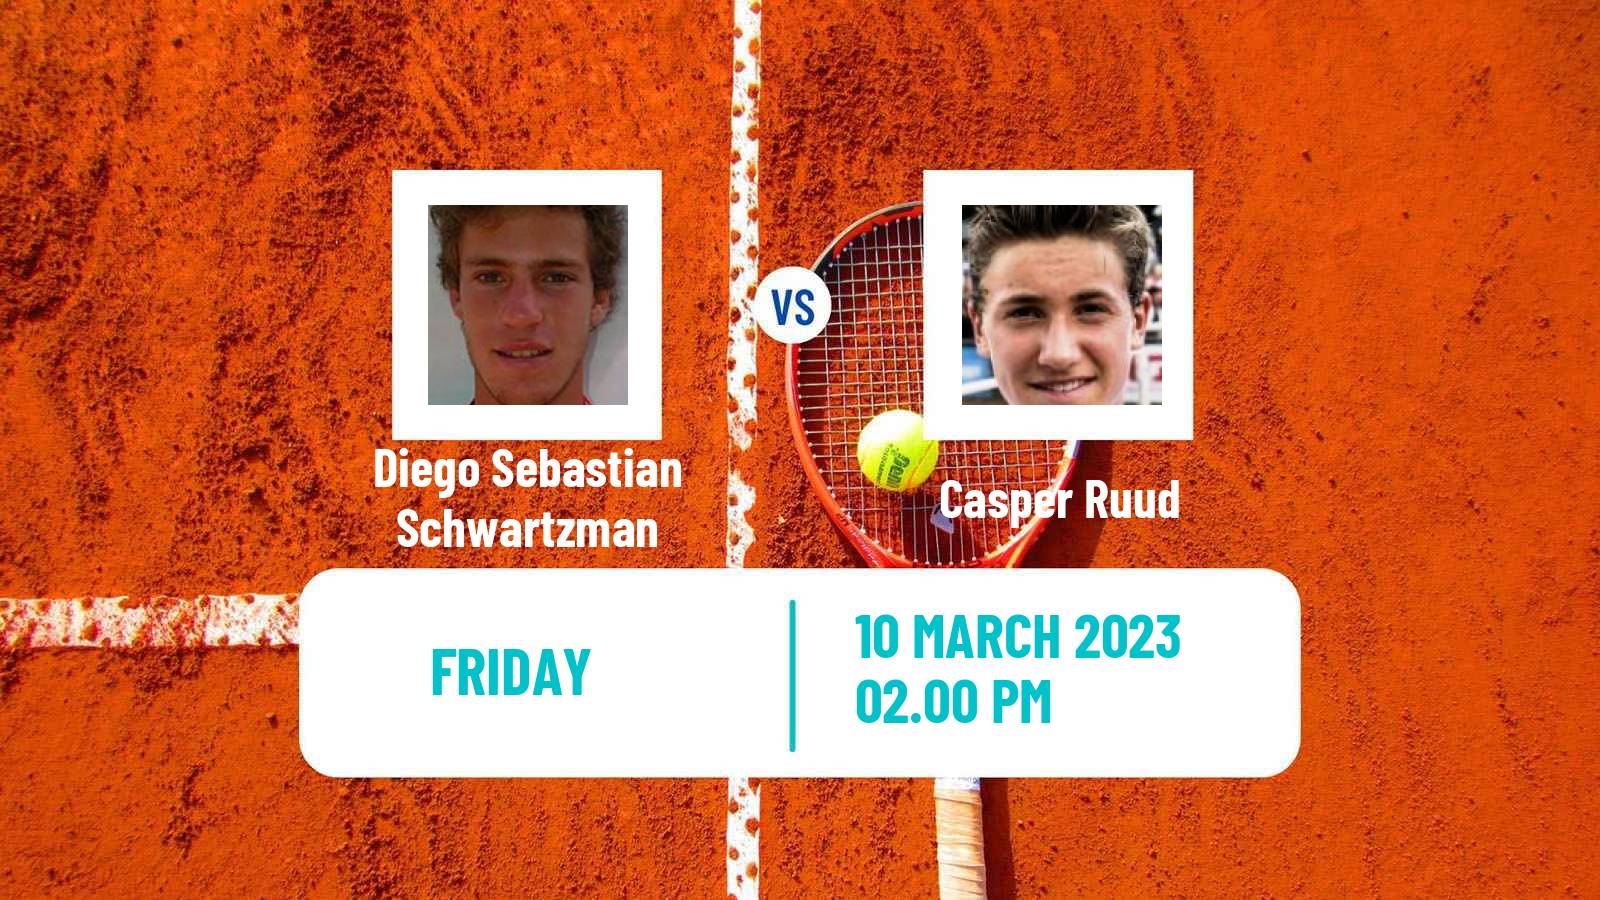 Tennis ATP Indian Wells Diego Sebastian Schwartzman - Casper Ruud